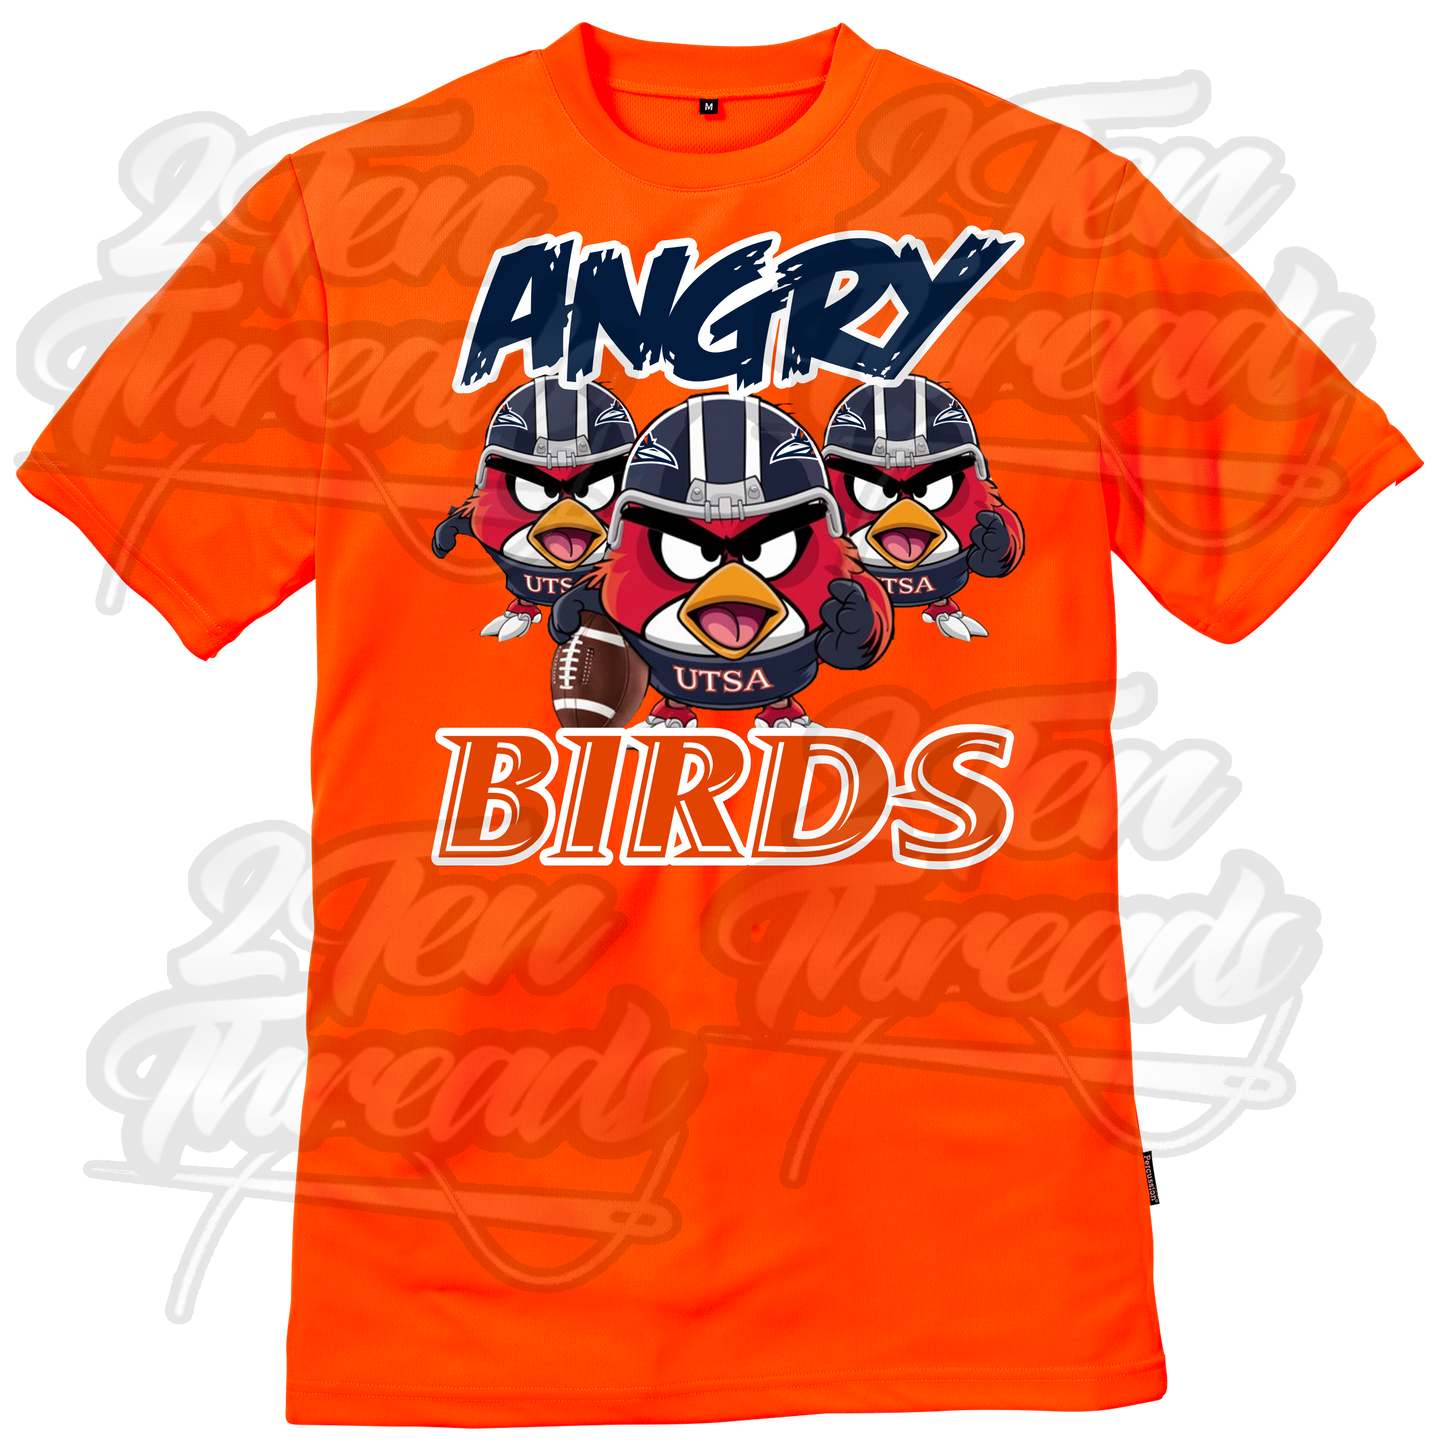 Angry Birds UTSA Shirt